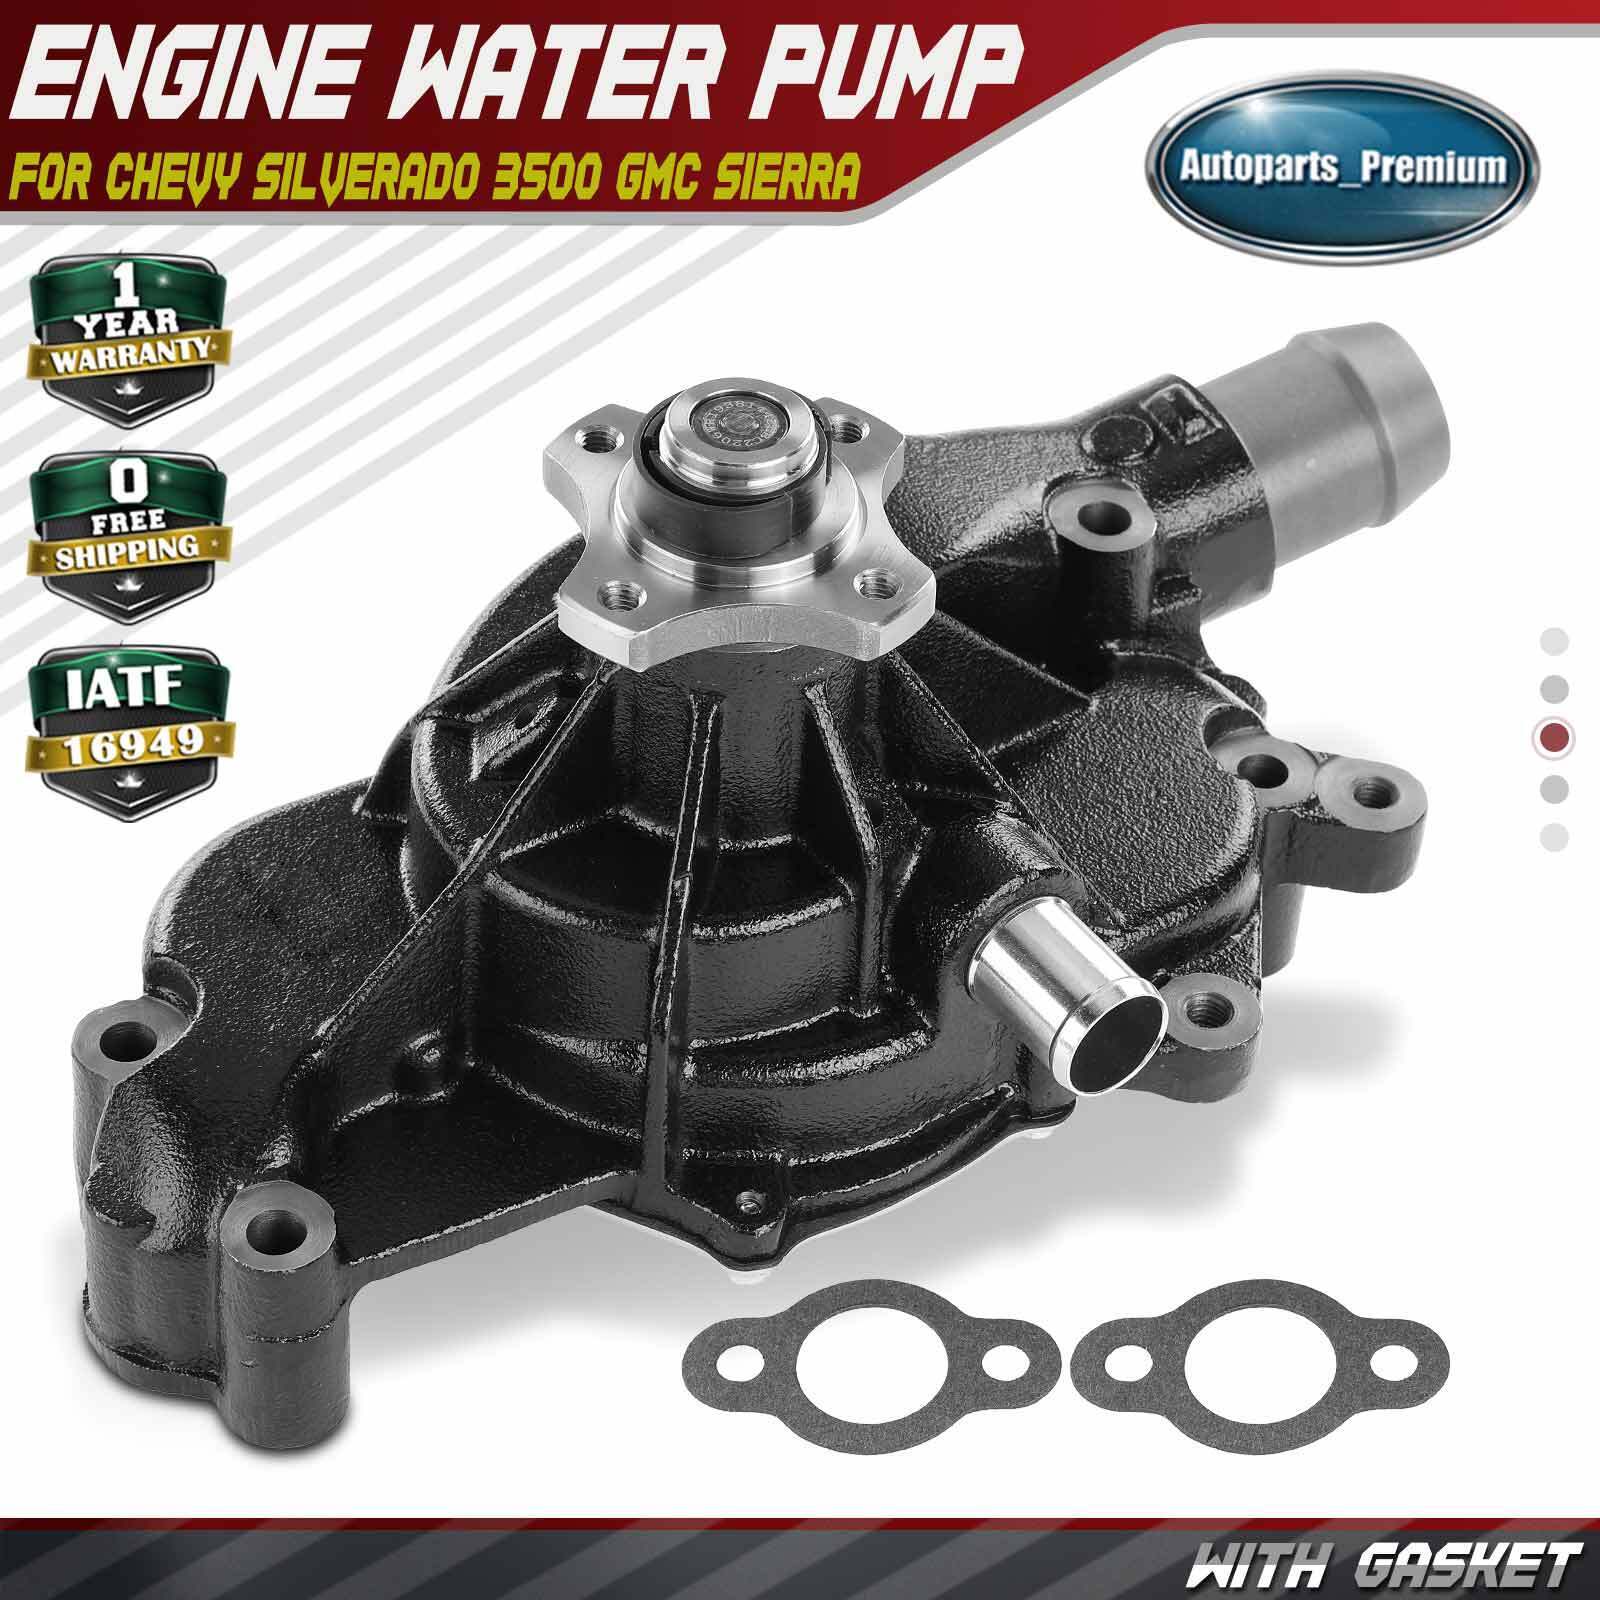 Engine Water Pump with Gasket for Chevrolet Silverado 3500 GMC Sierra 2500 HD